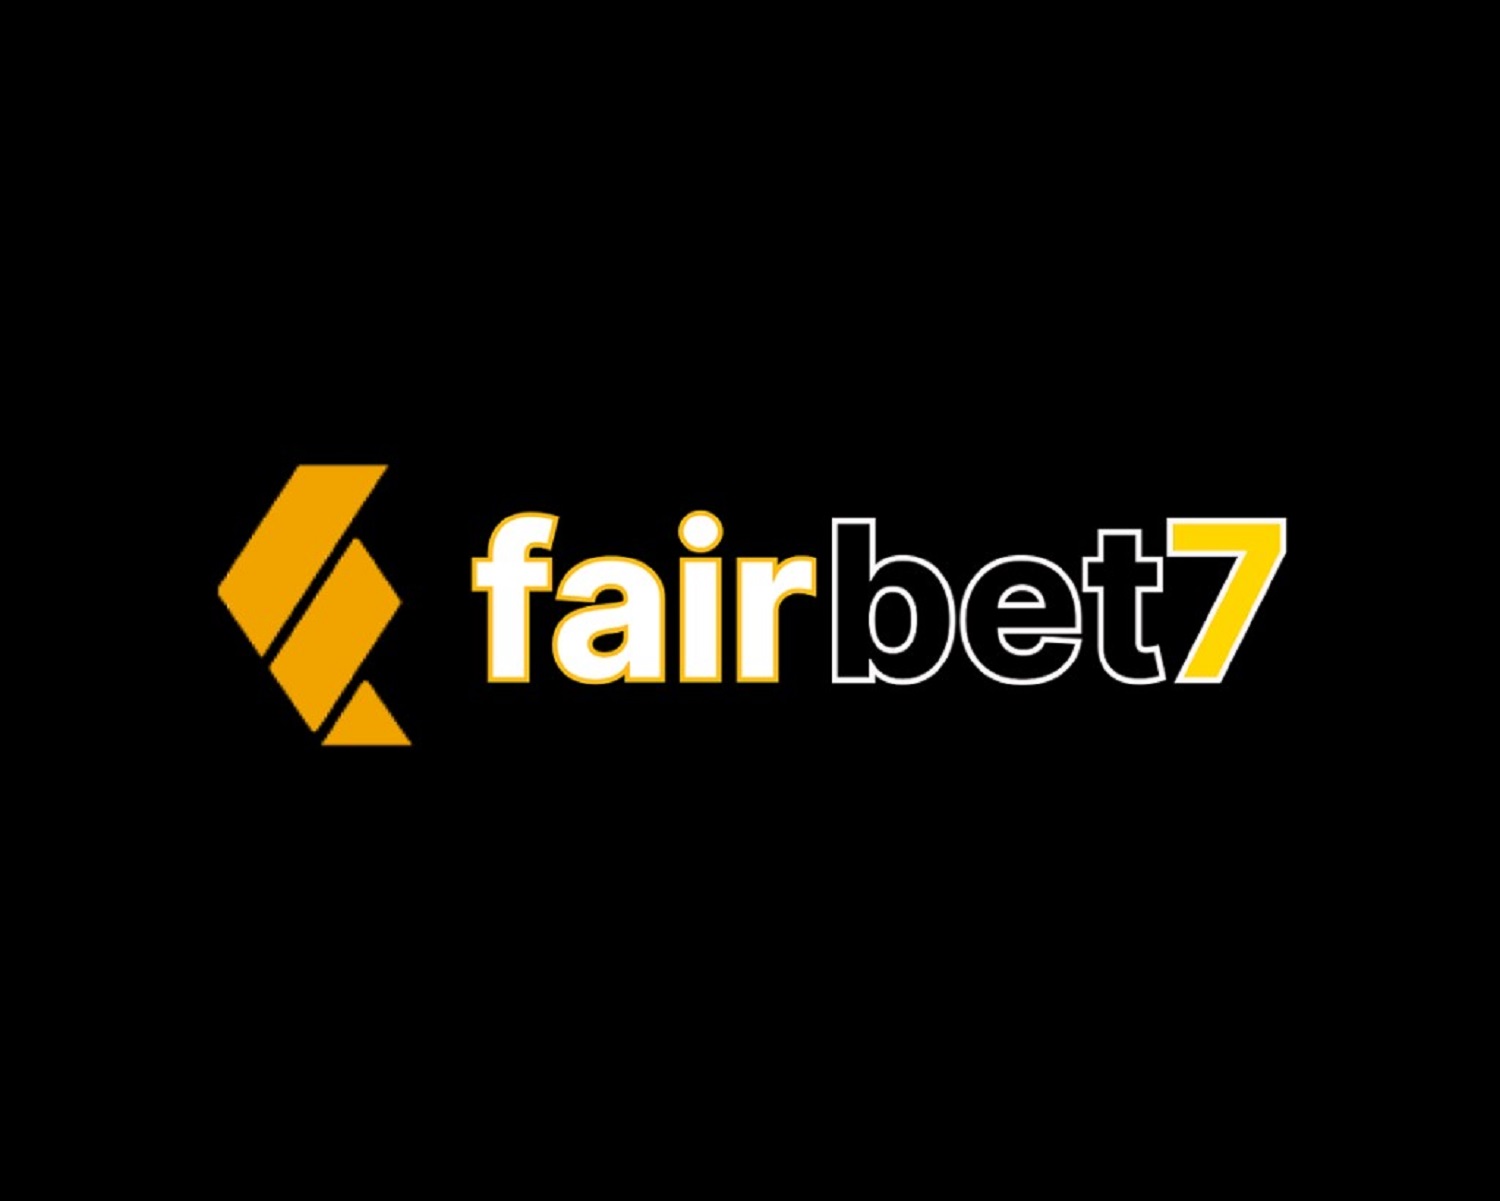 Fairbet7